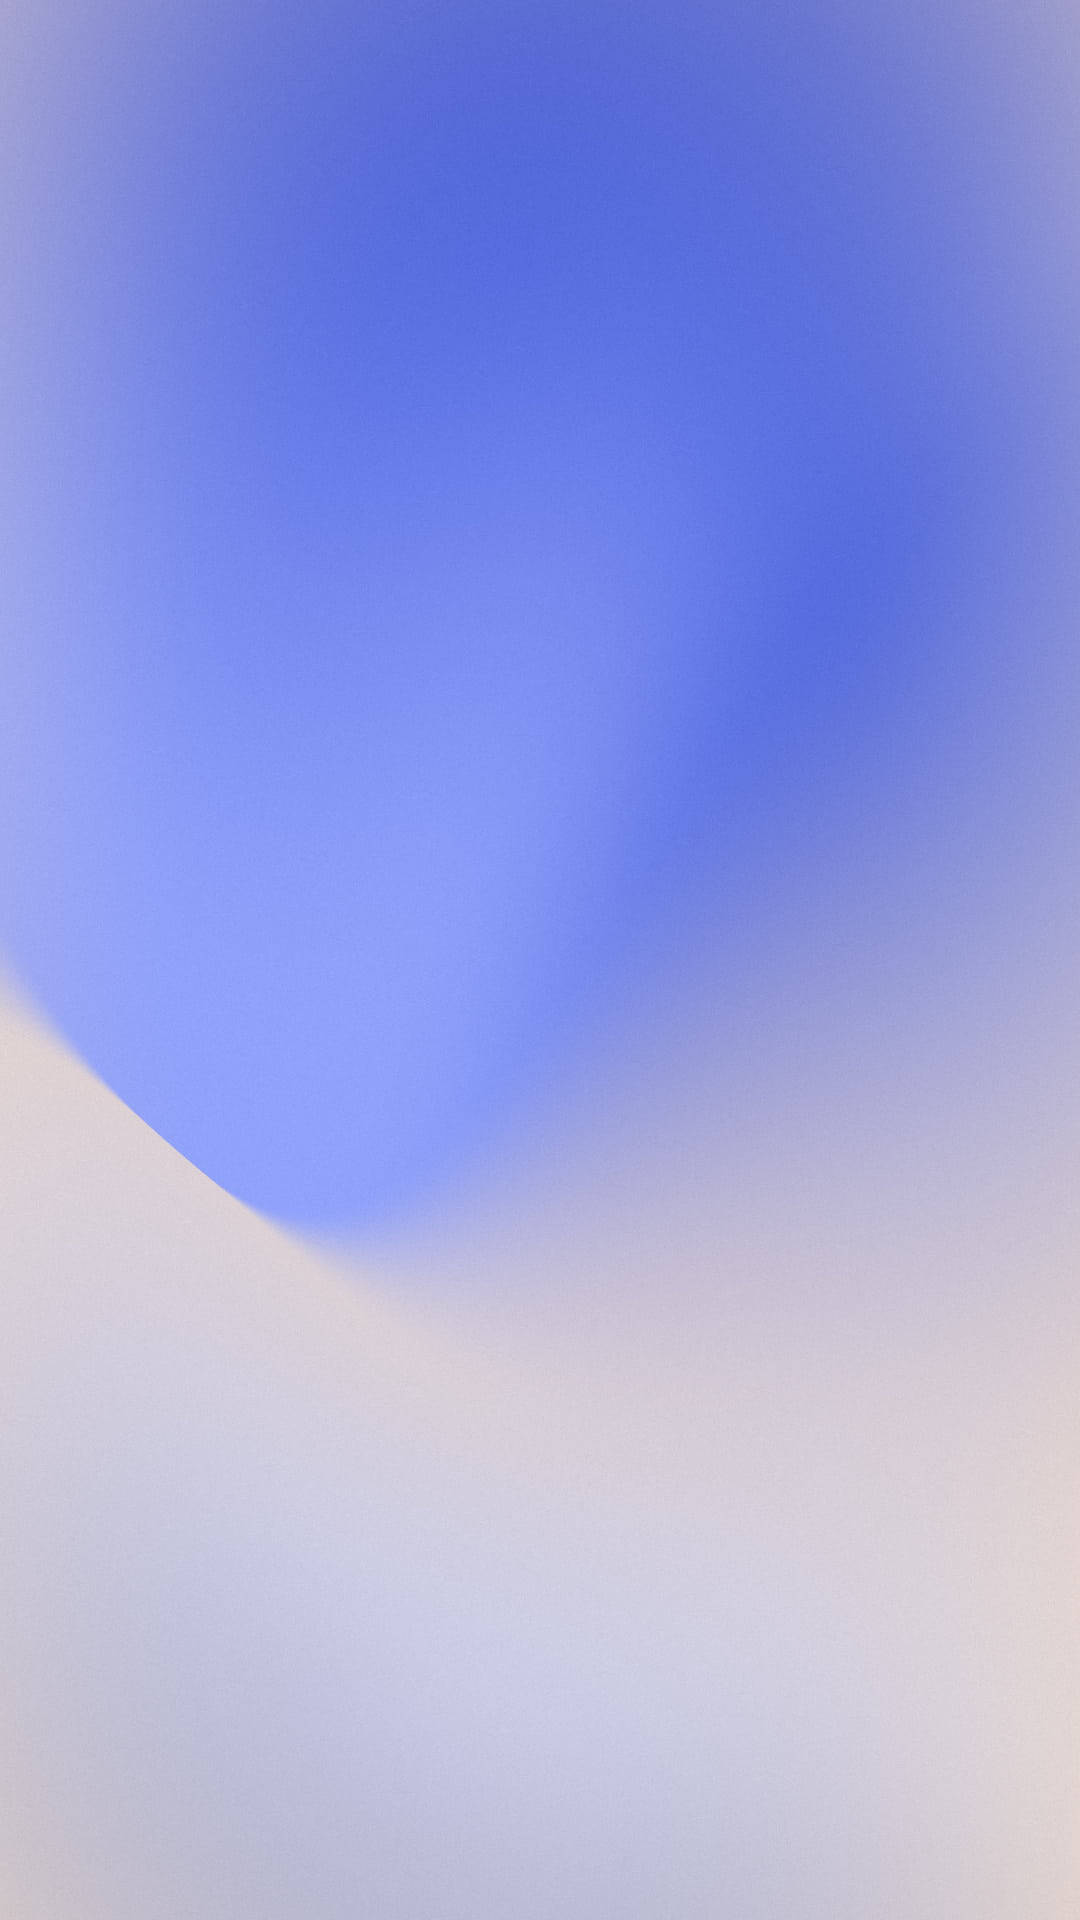 Pixel3 Xl Verlaufsviolett Wallpaper